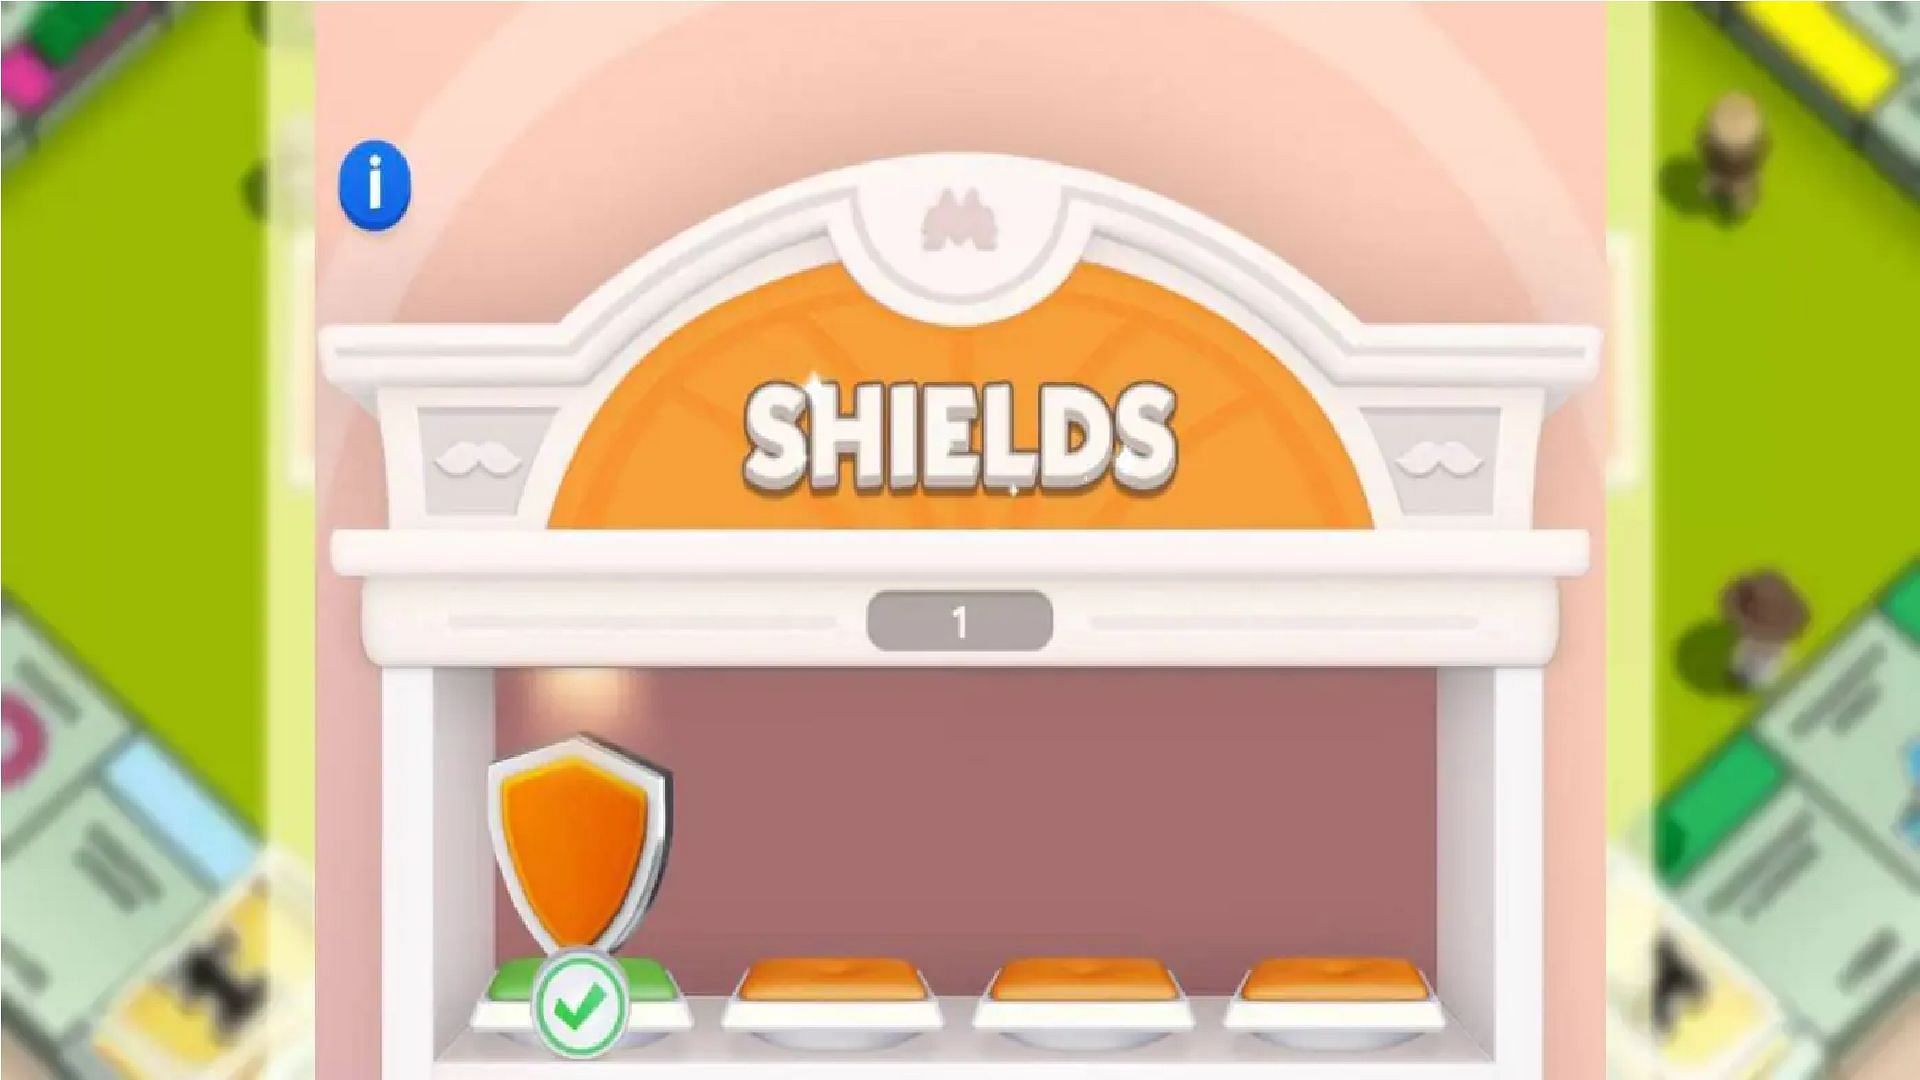 Shields on Monopoly Go